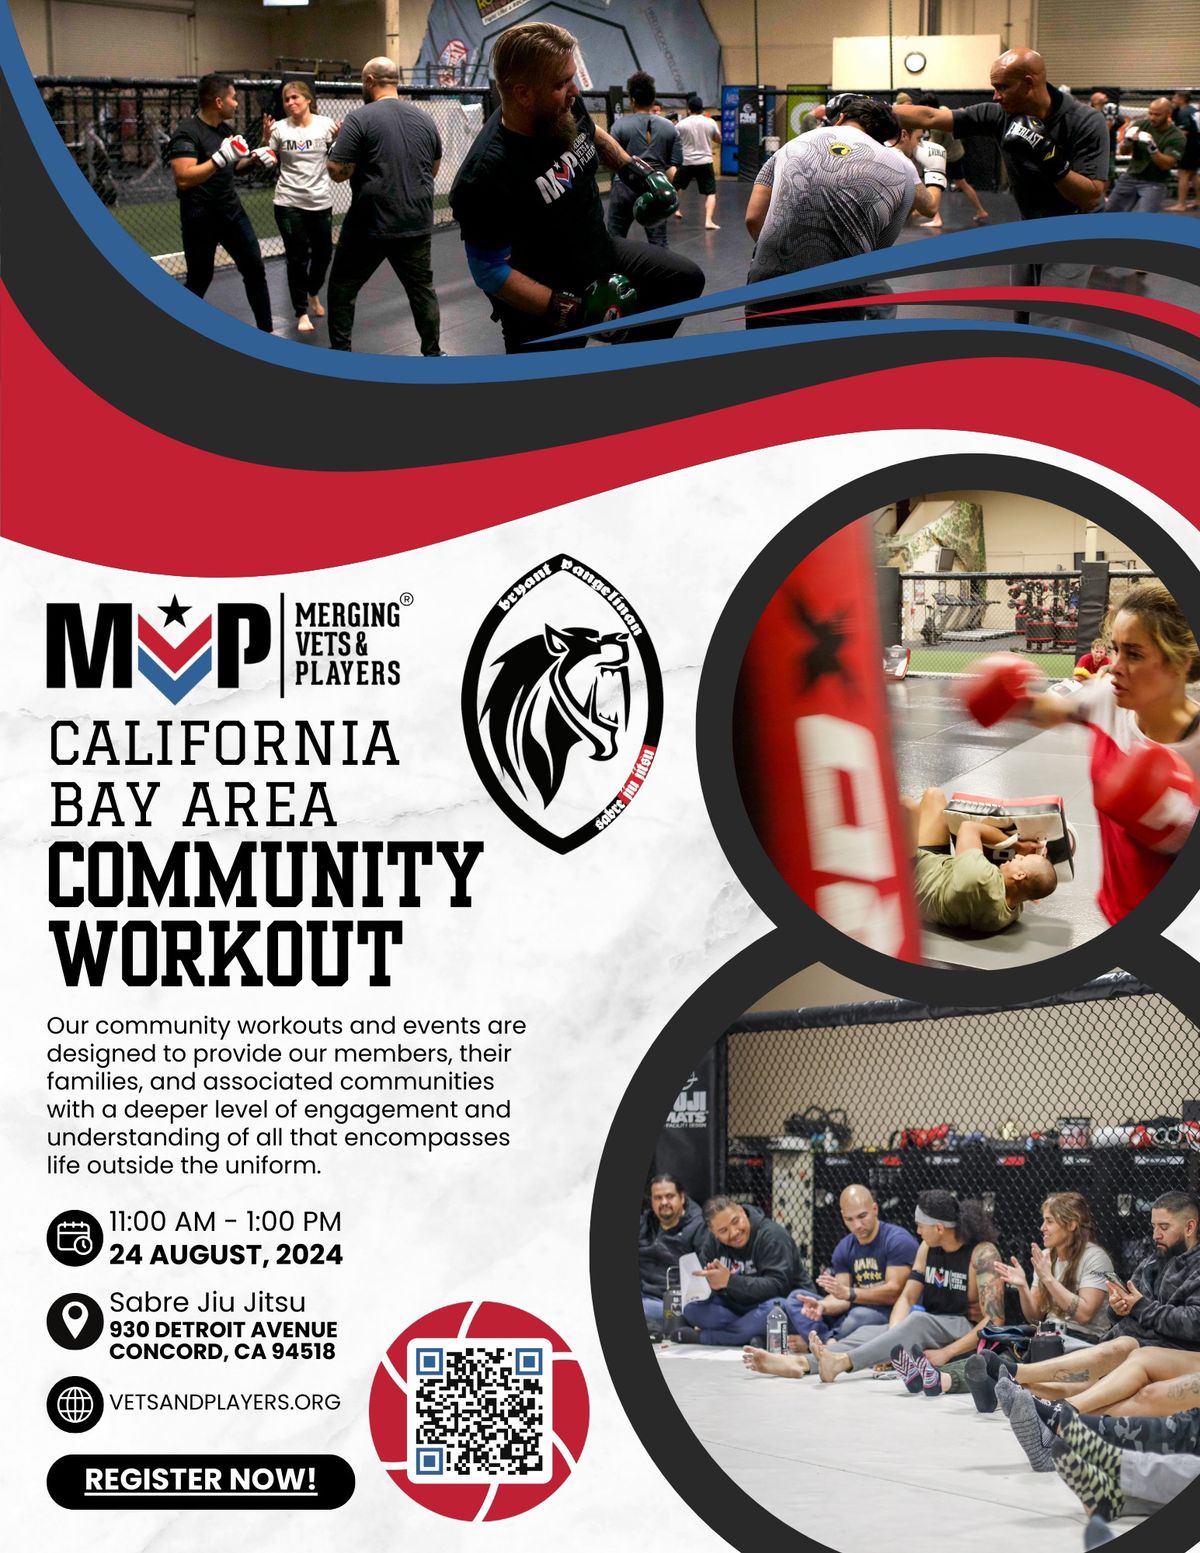 MVP Bay Area California Community Workout at Sabre Jiu Jitsu